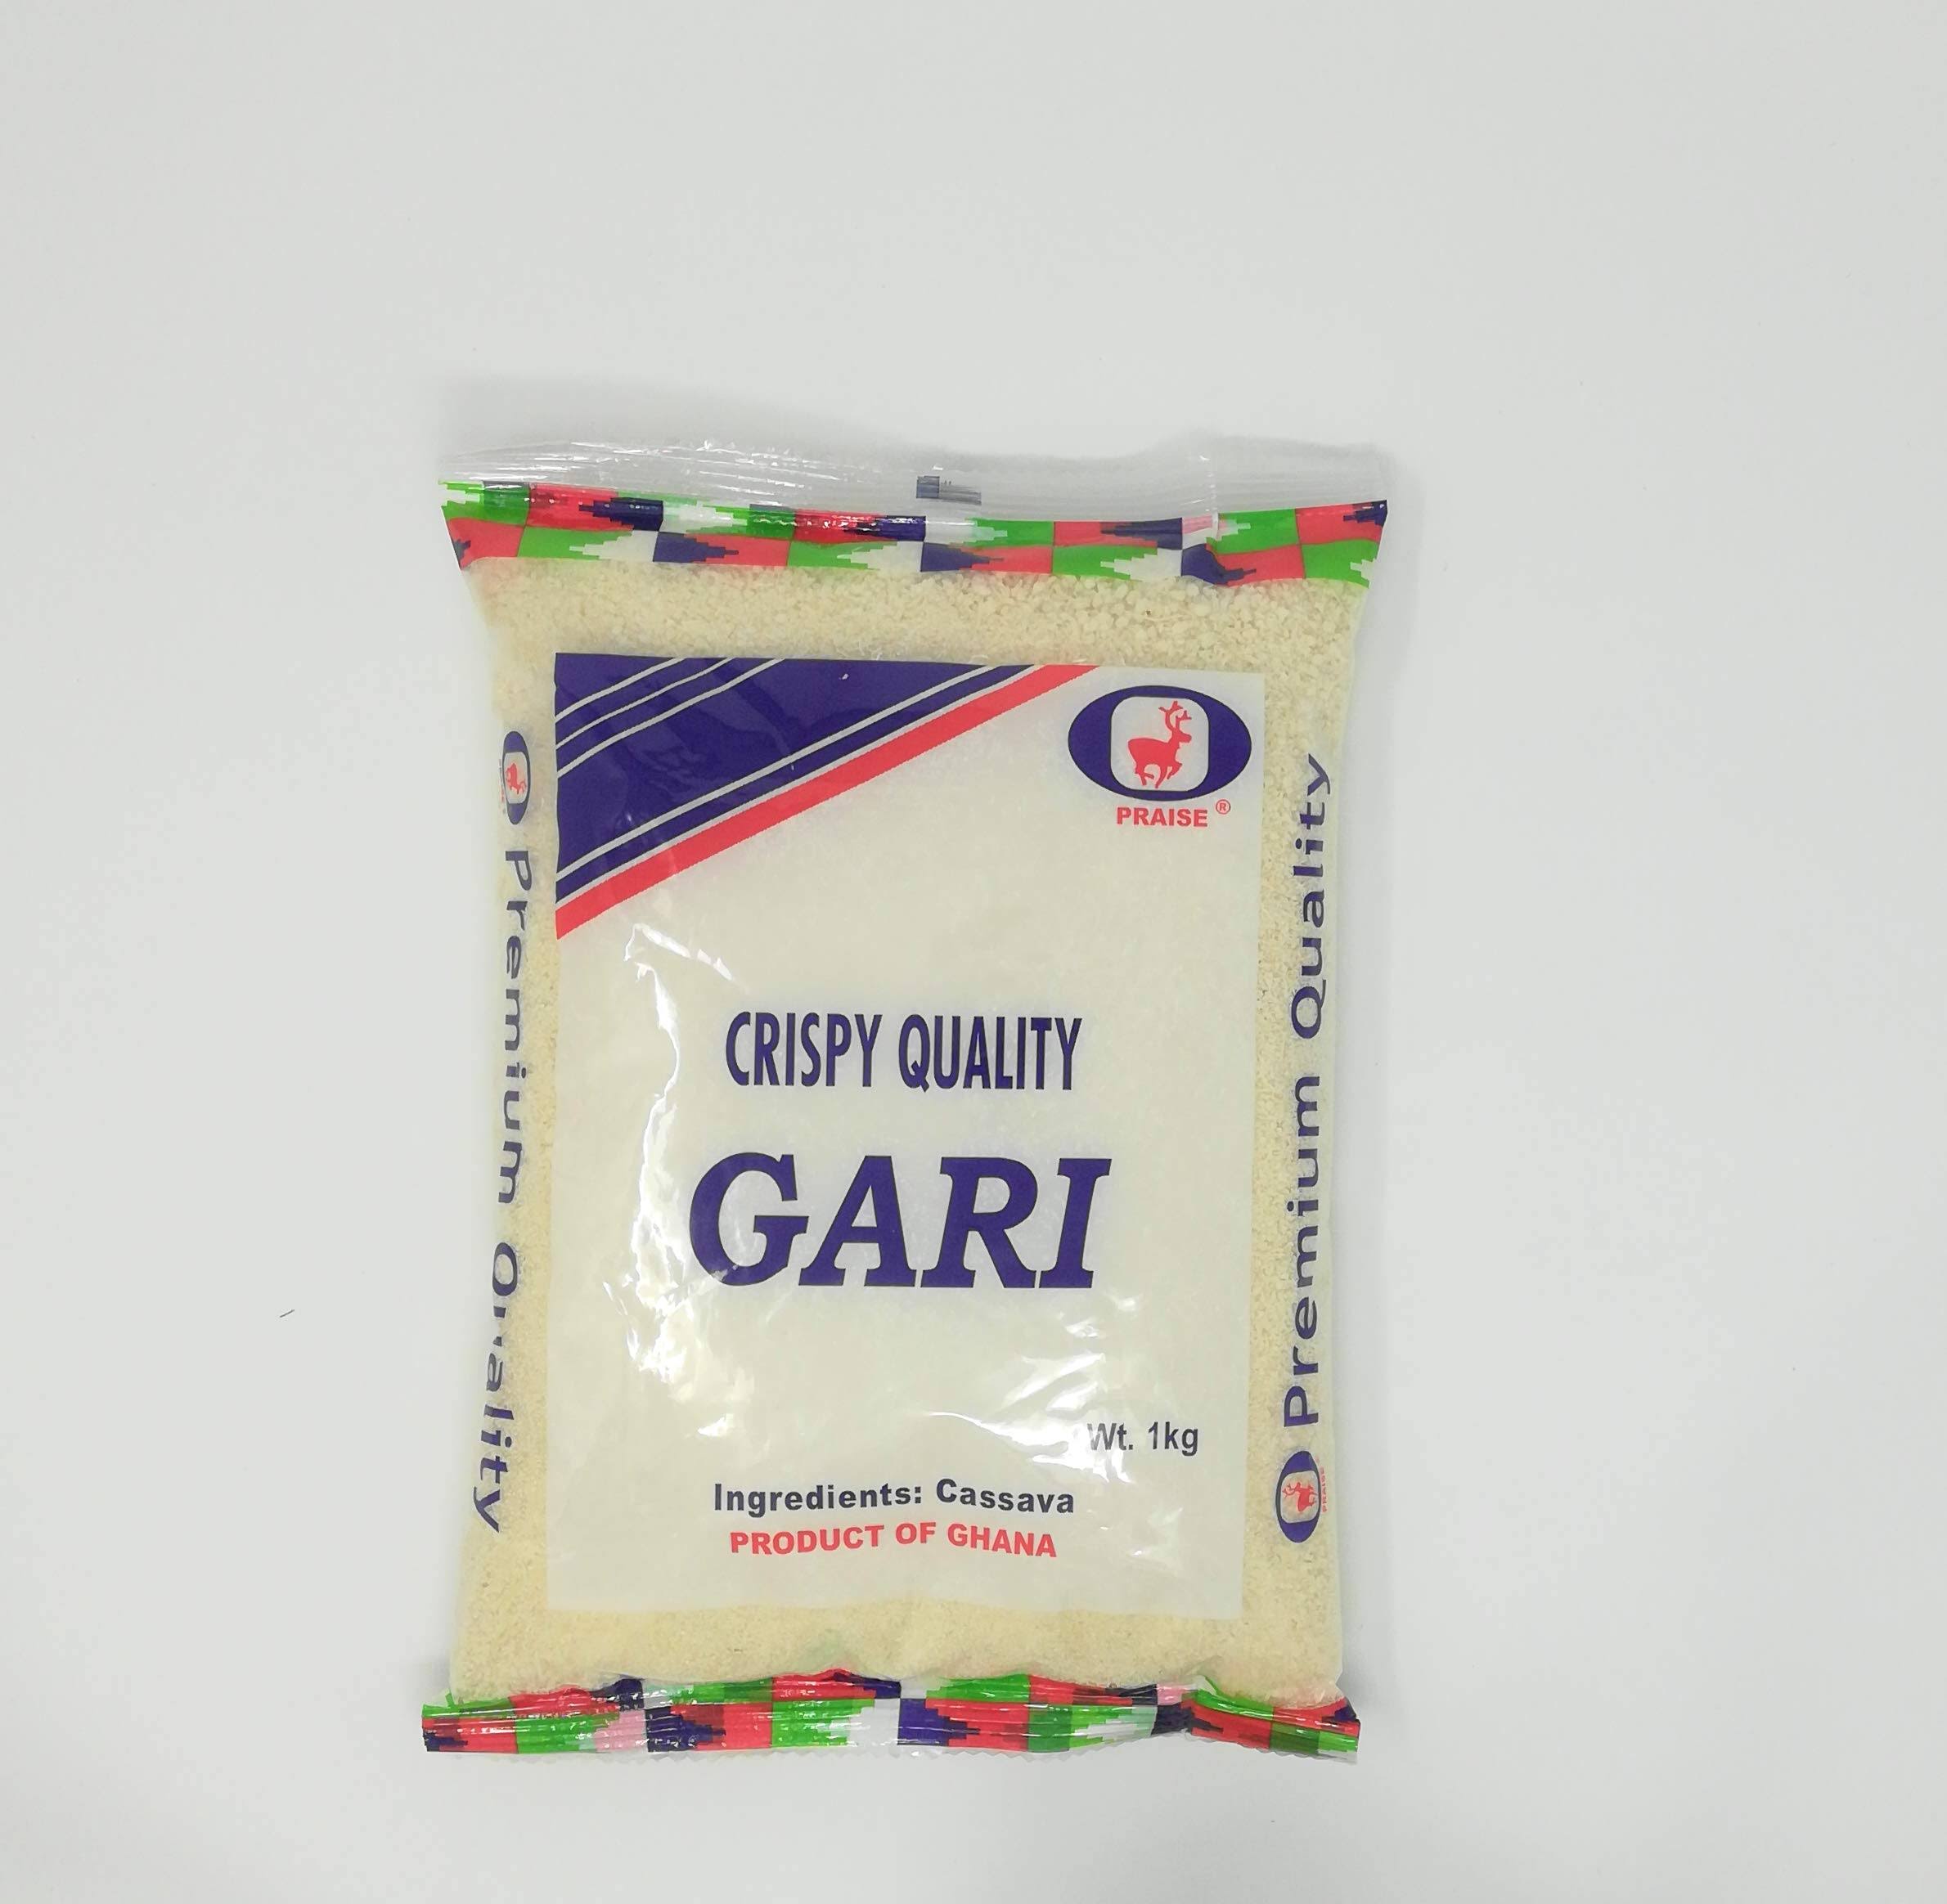 Praise Premium Crispy Quality Gari Flour - 1 Kilogram - America's Food Basket - Lawrence - Delivered by Mercato